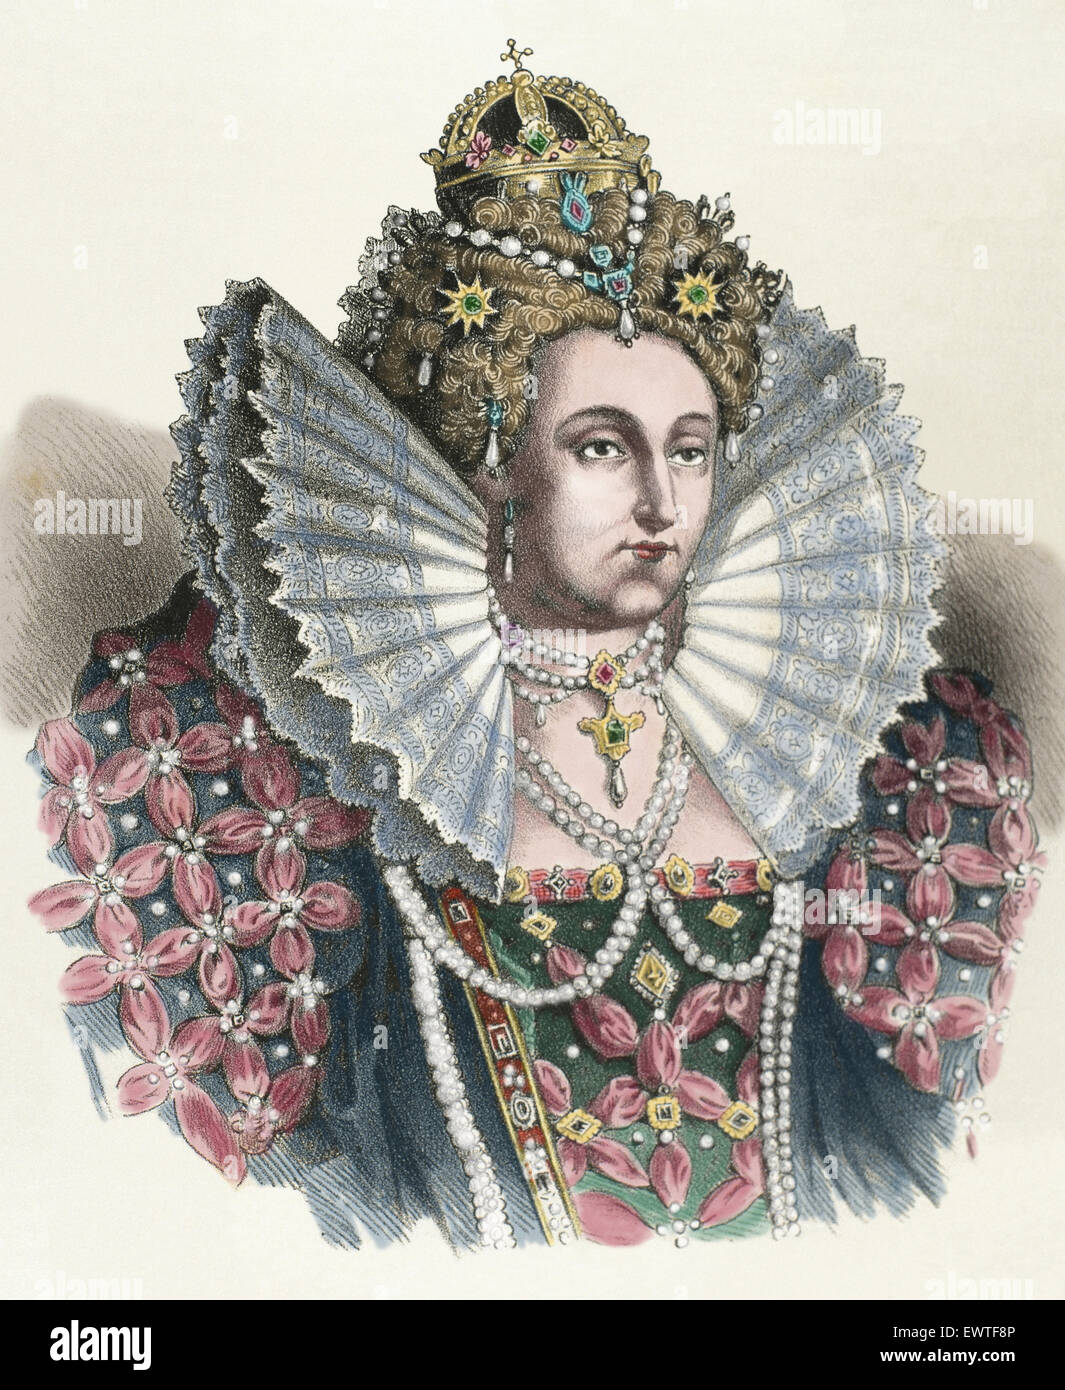 Elizabeth I of England (1533-1603). Queen of England and Ireland. The Virgin Queen. Portrait. Engraving. 19th century. Historia de Espana. Colored. Stock Photo